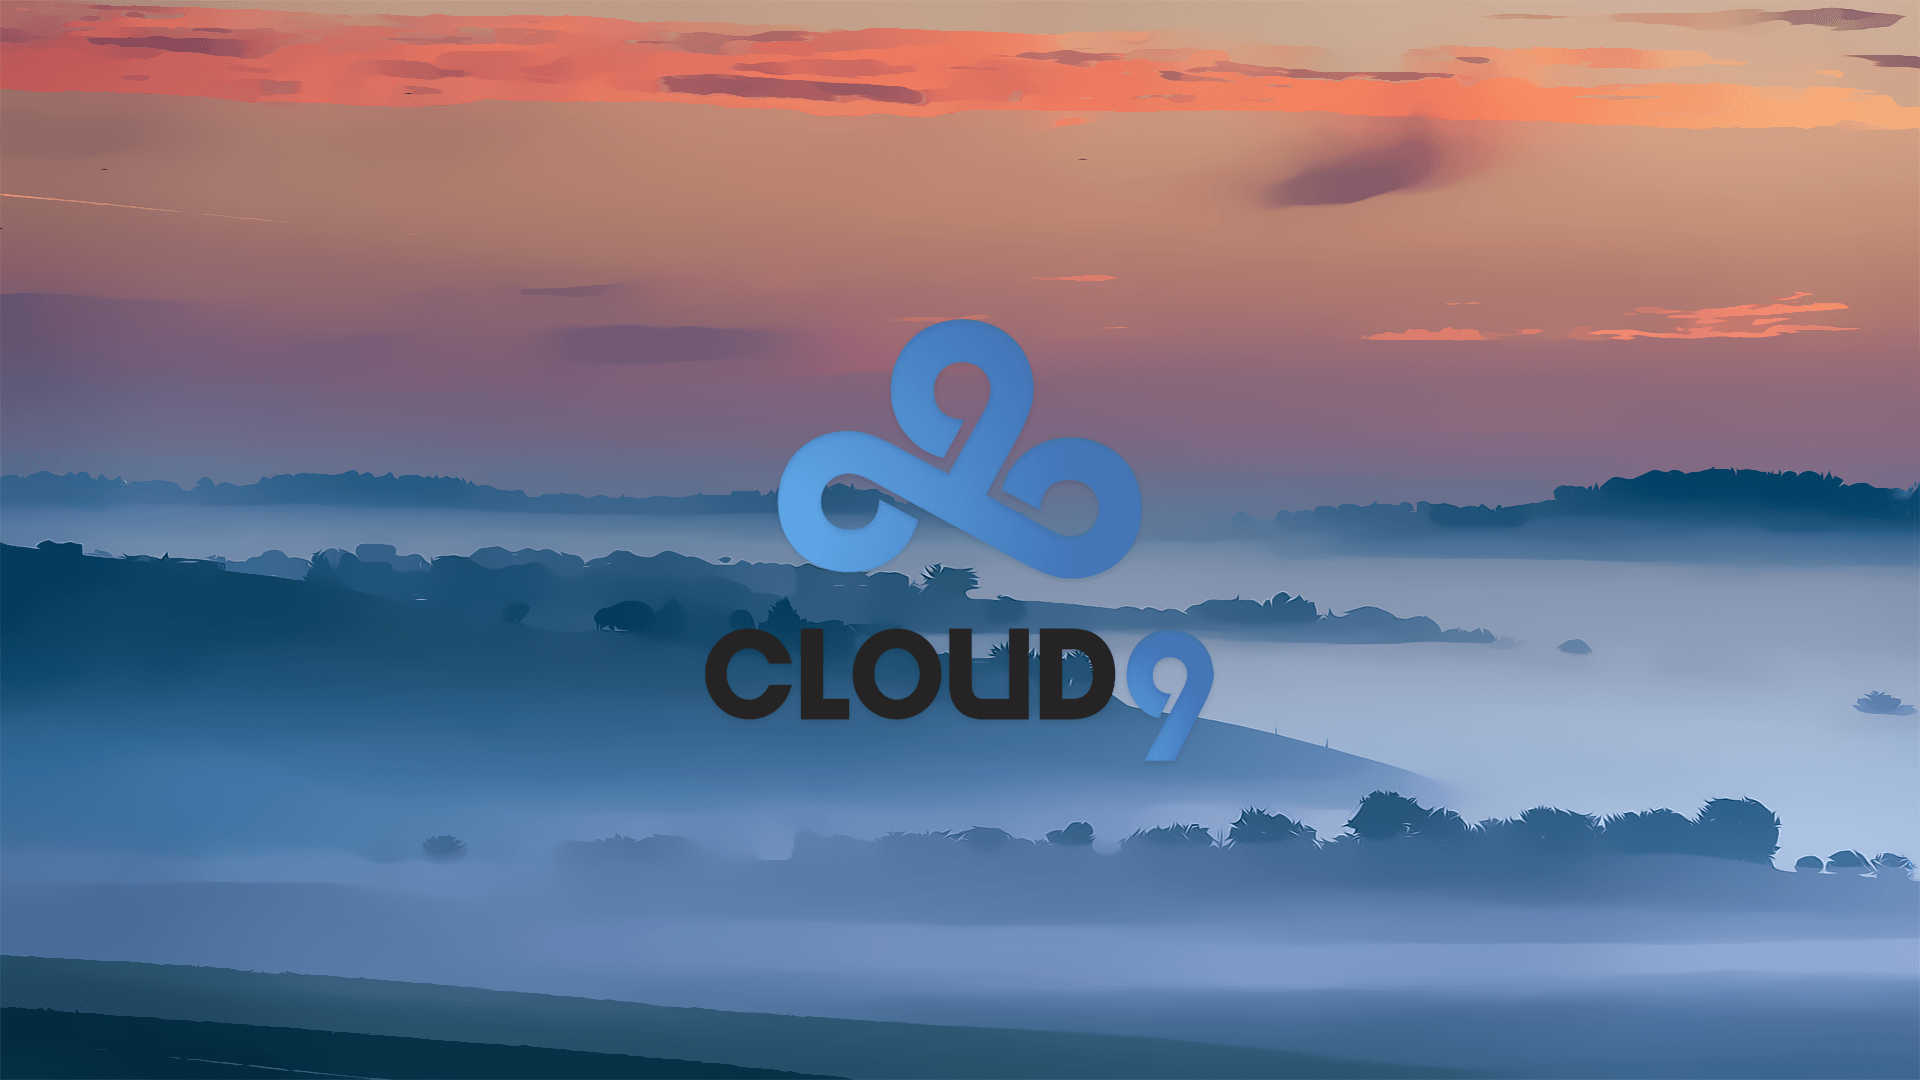 Cloud 9 Wallpapers HD High Quality for Desktop - PixelsTalk.Net